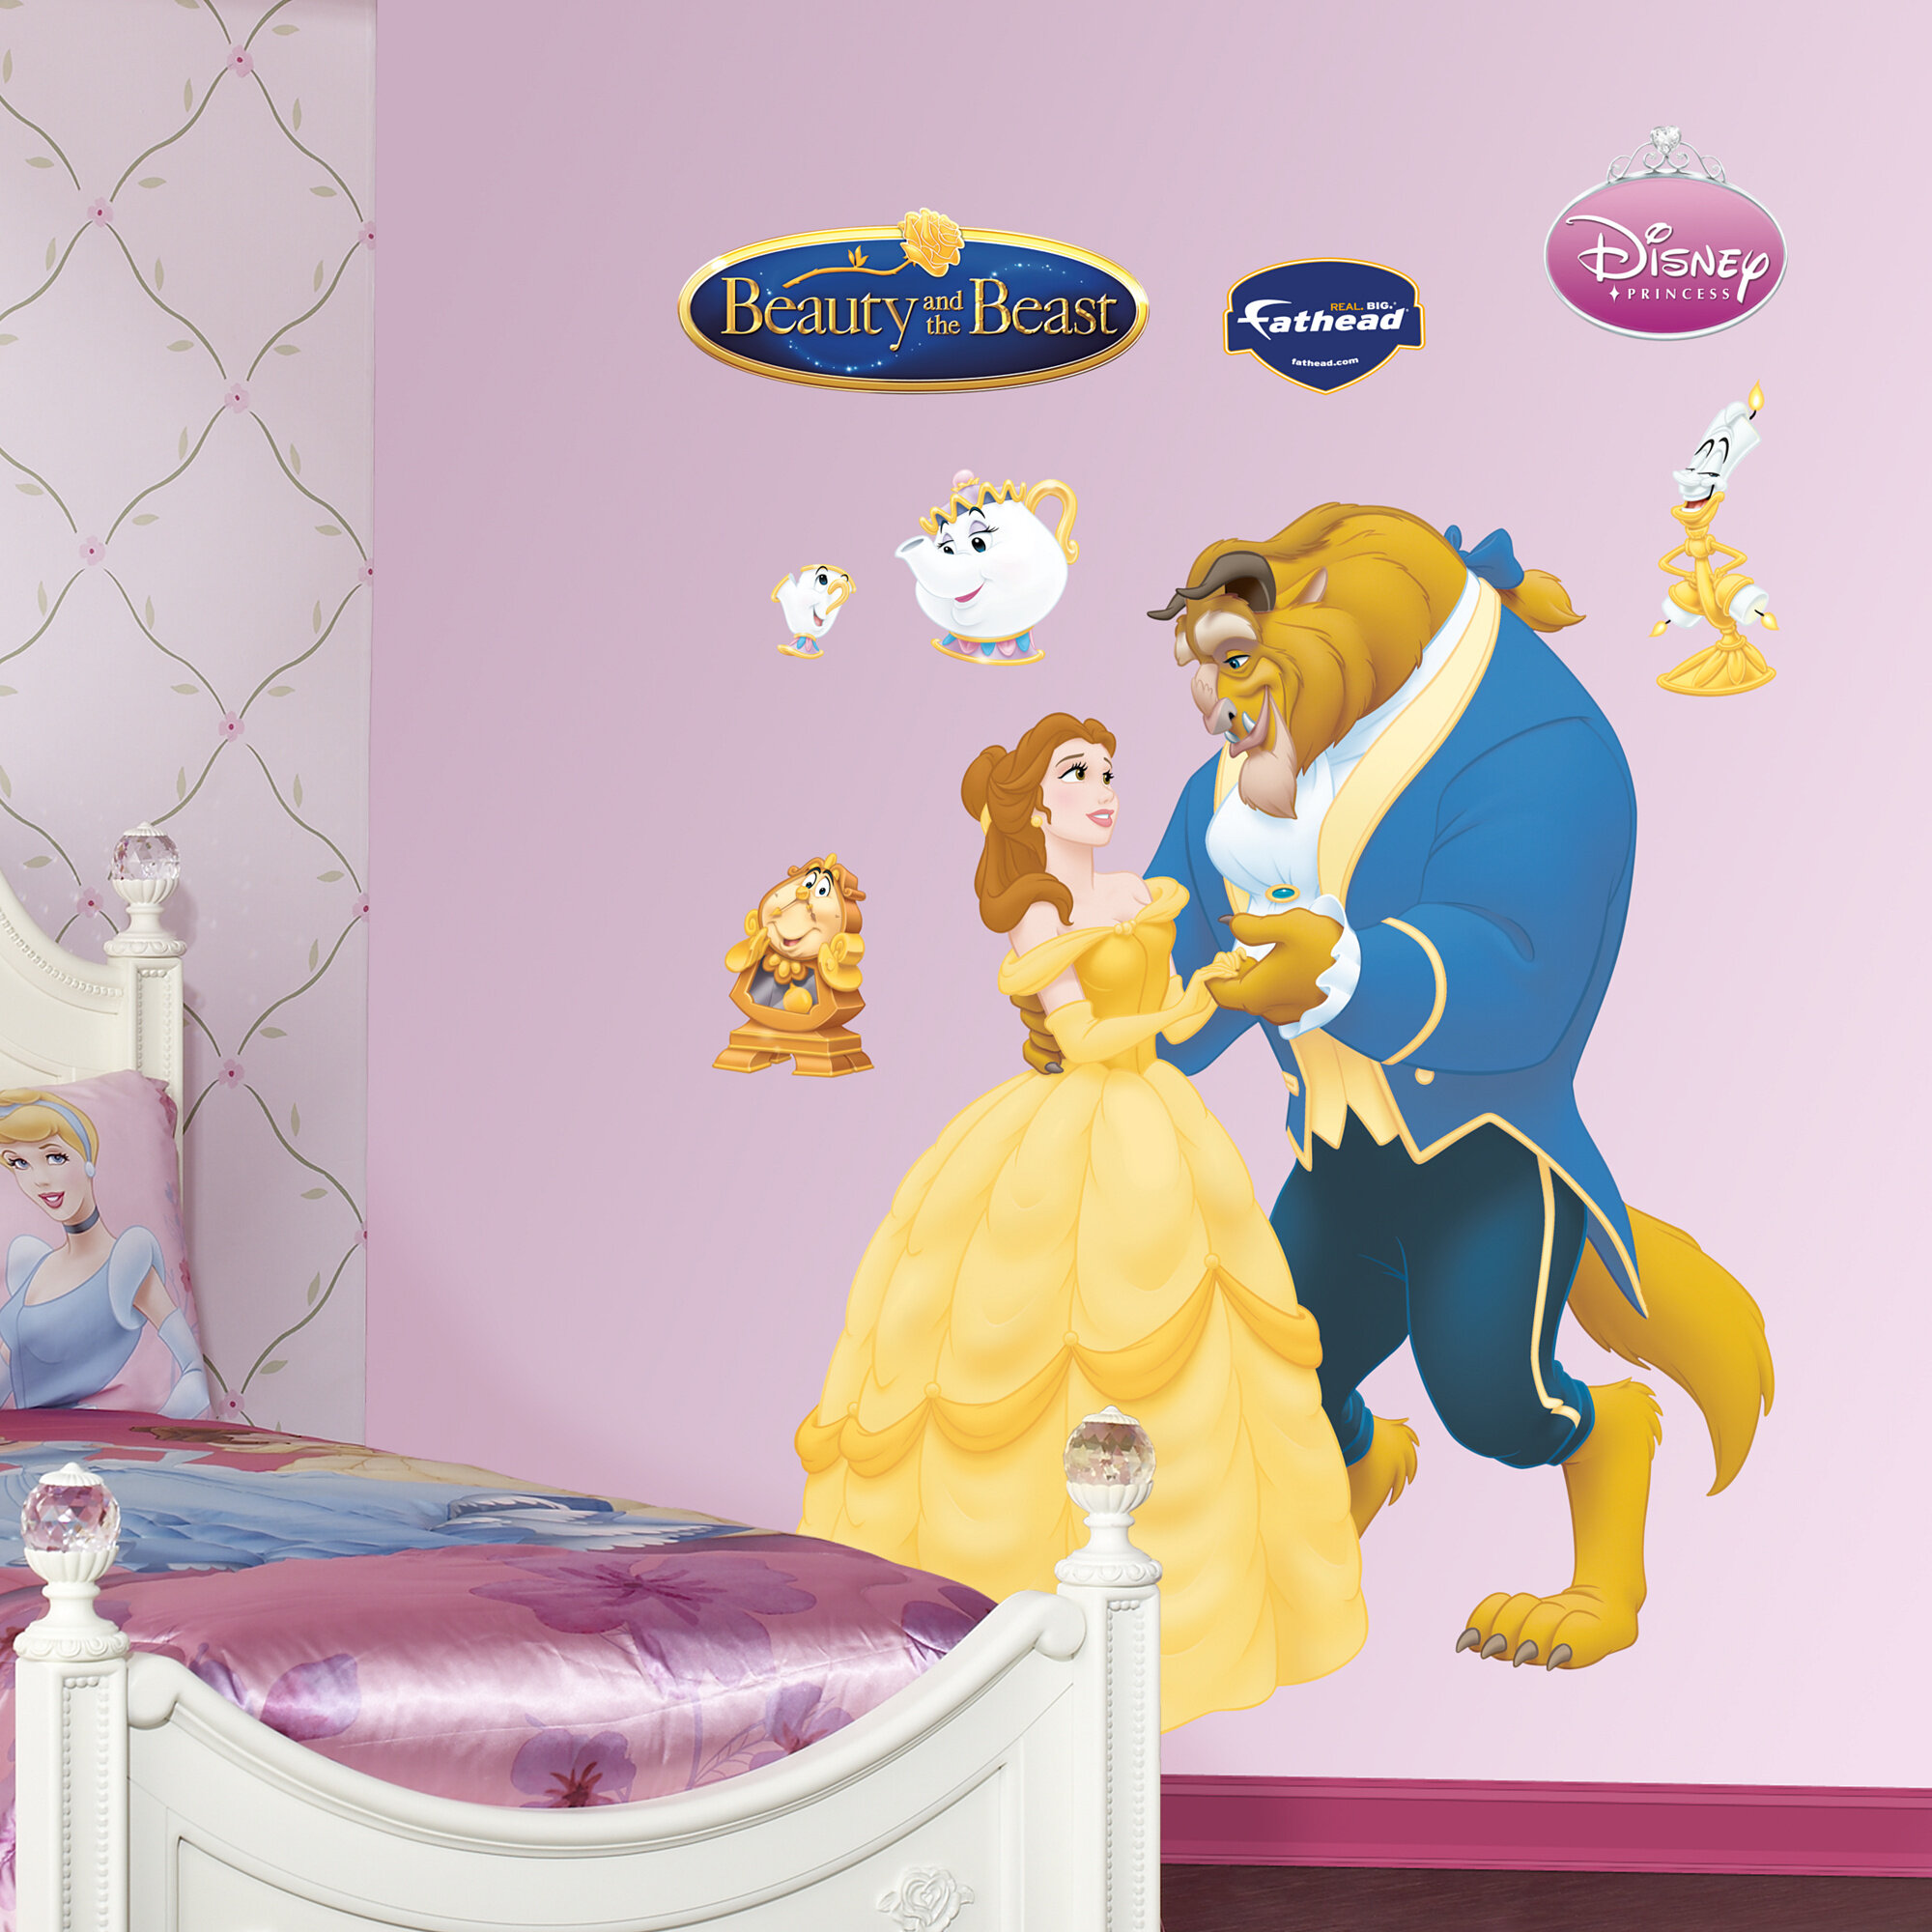 Fathead Disney Beauty And The Beast Wall Decal Wayfair